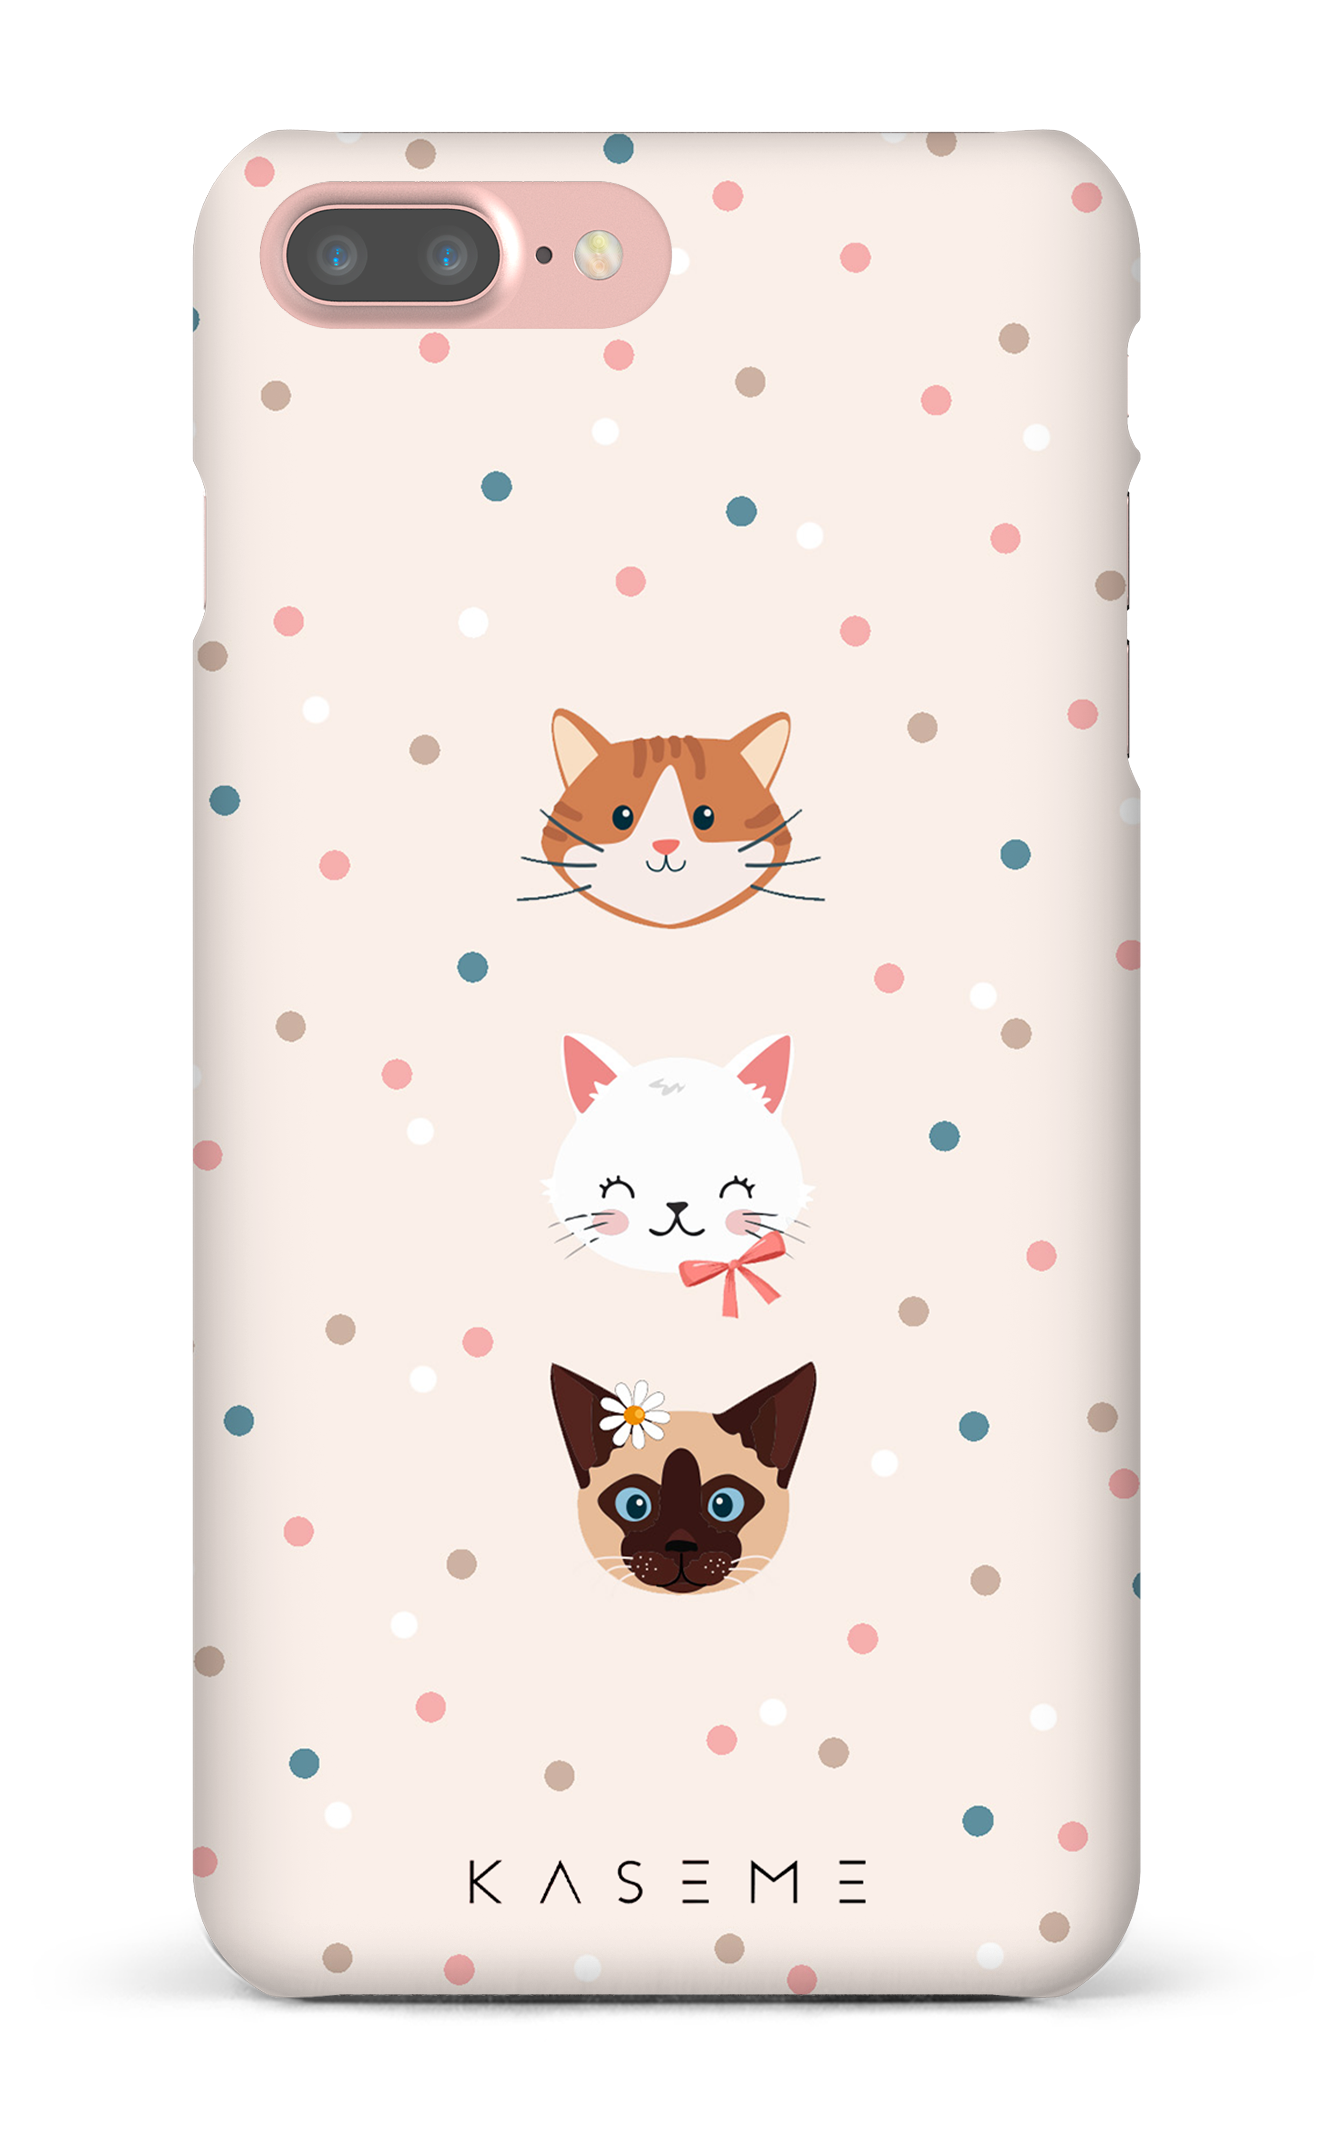 Cat lover by Marina Bastarache x SPCA - iPhone 7 Plus